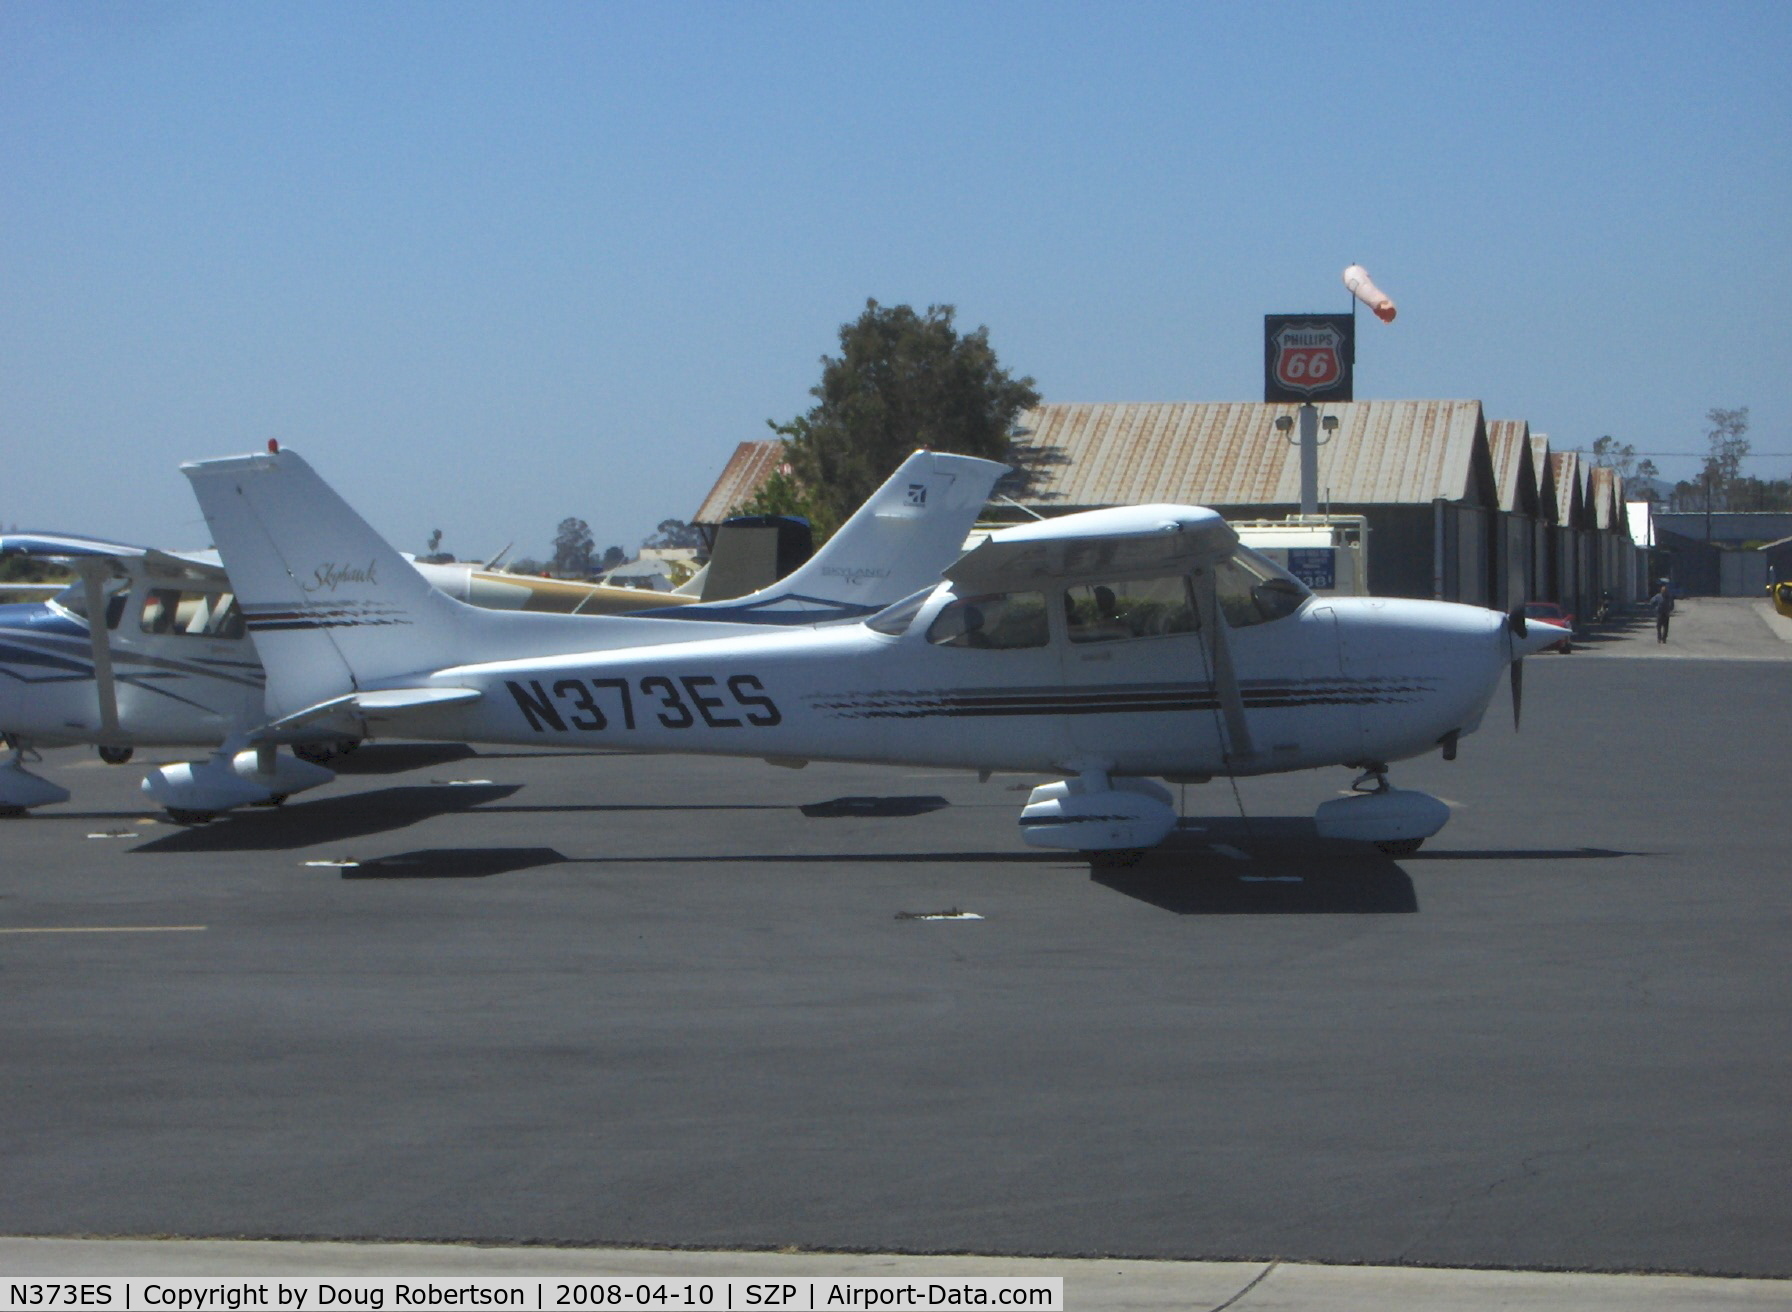 N373ES, 1997 Cessna 172R C/N 17280052, 1997 Cessna 172R, Lycoming IO-360-L2A 160 Hp